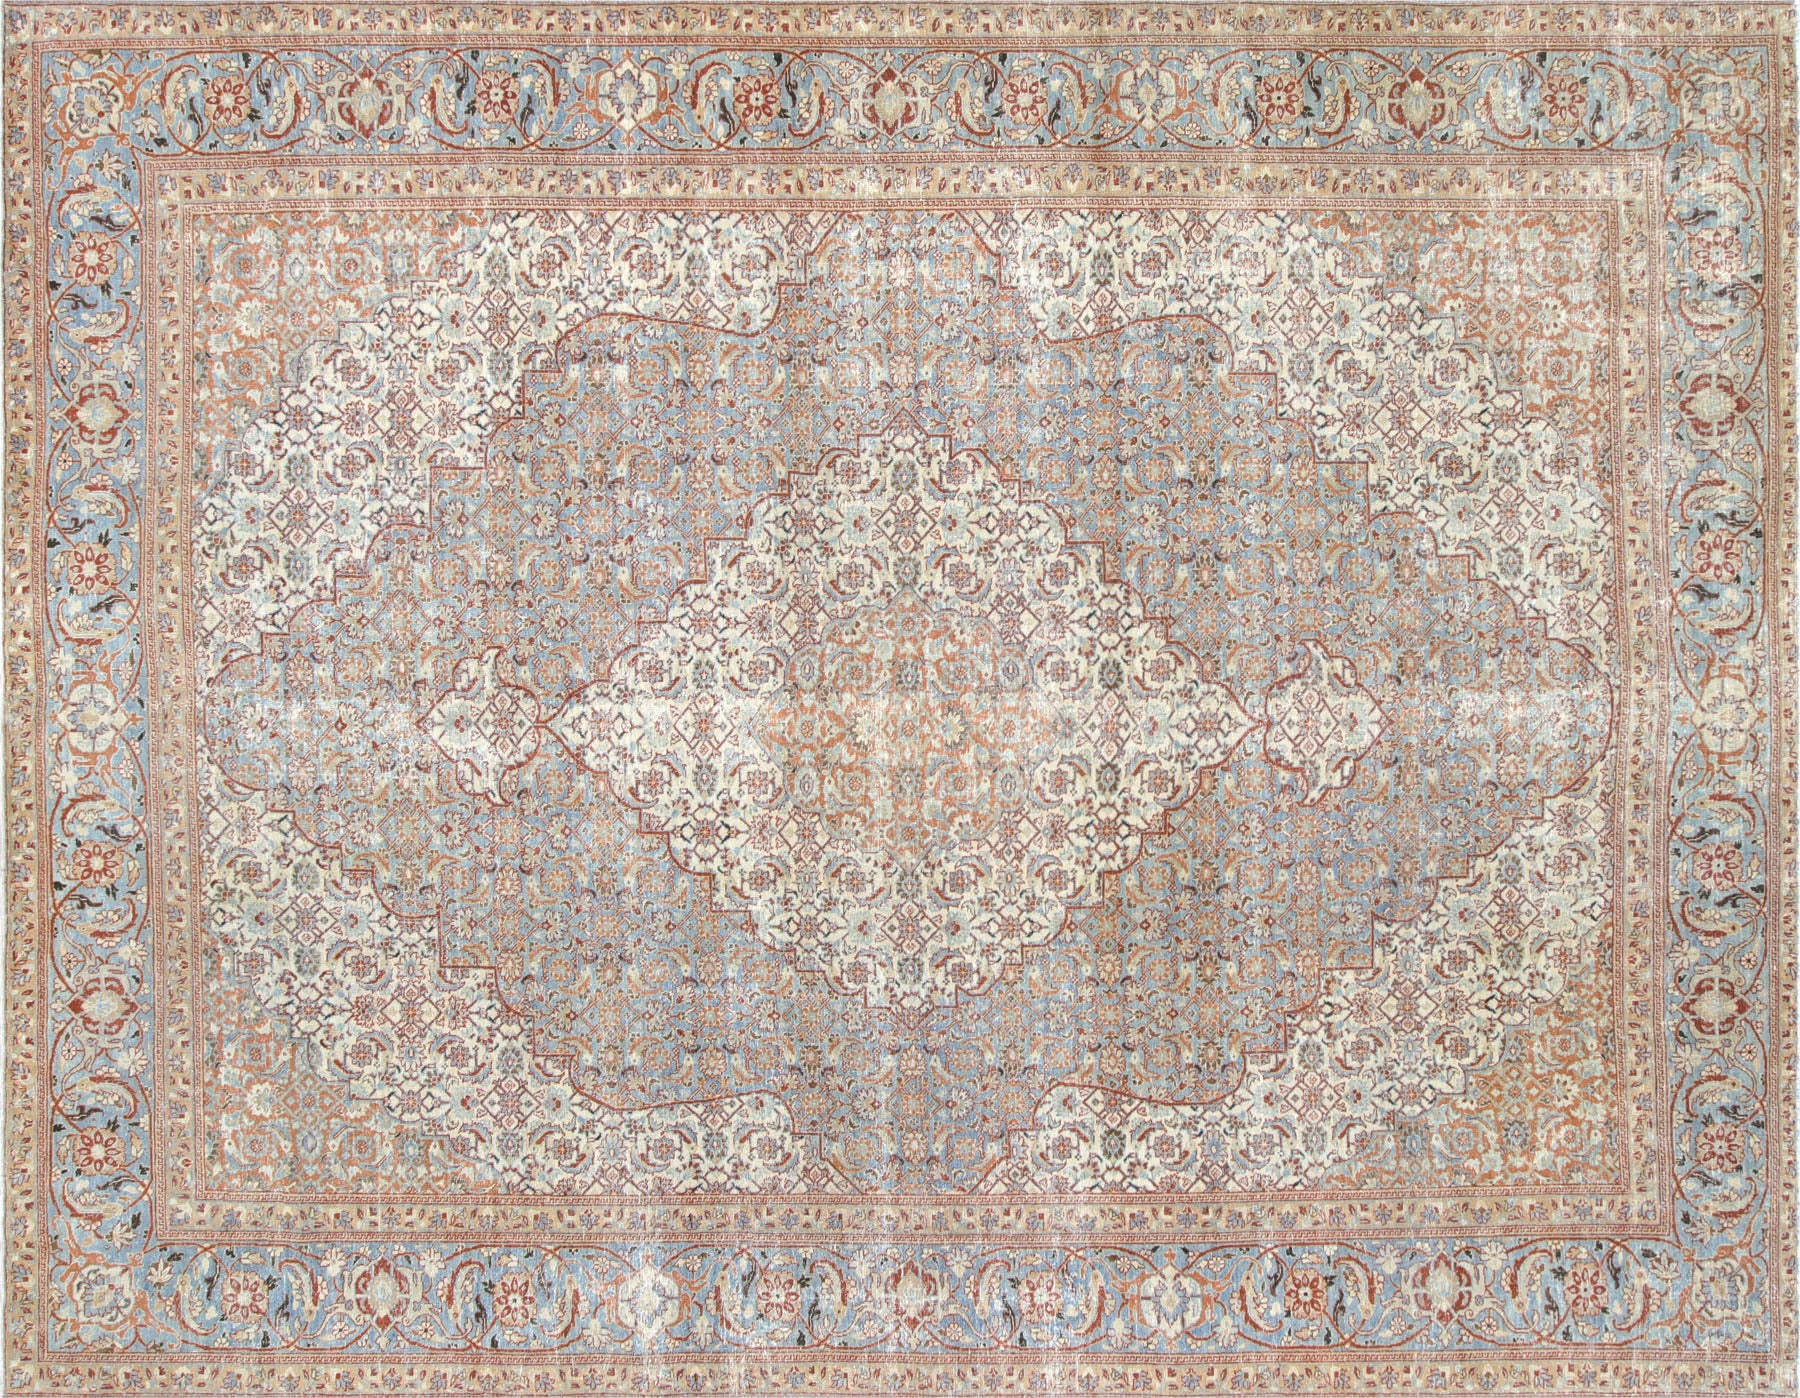 Antique Persian Tabriz Carpet - 9'3" x 12'